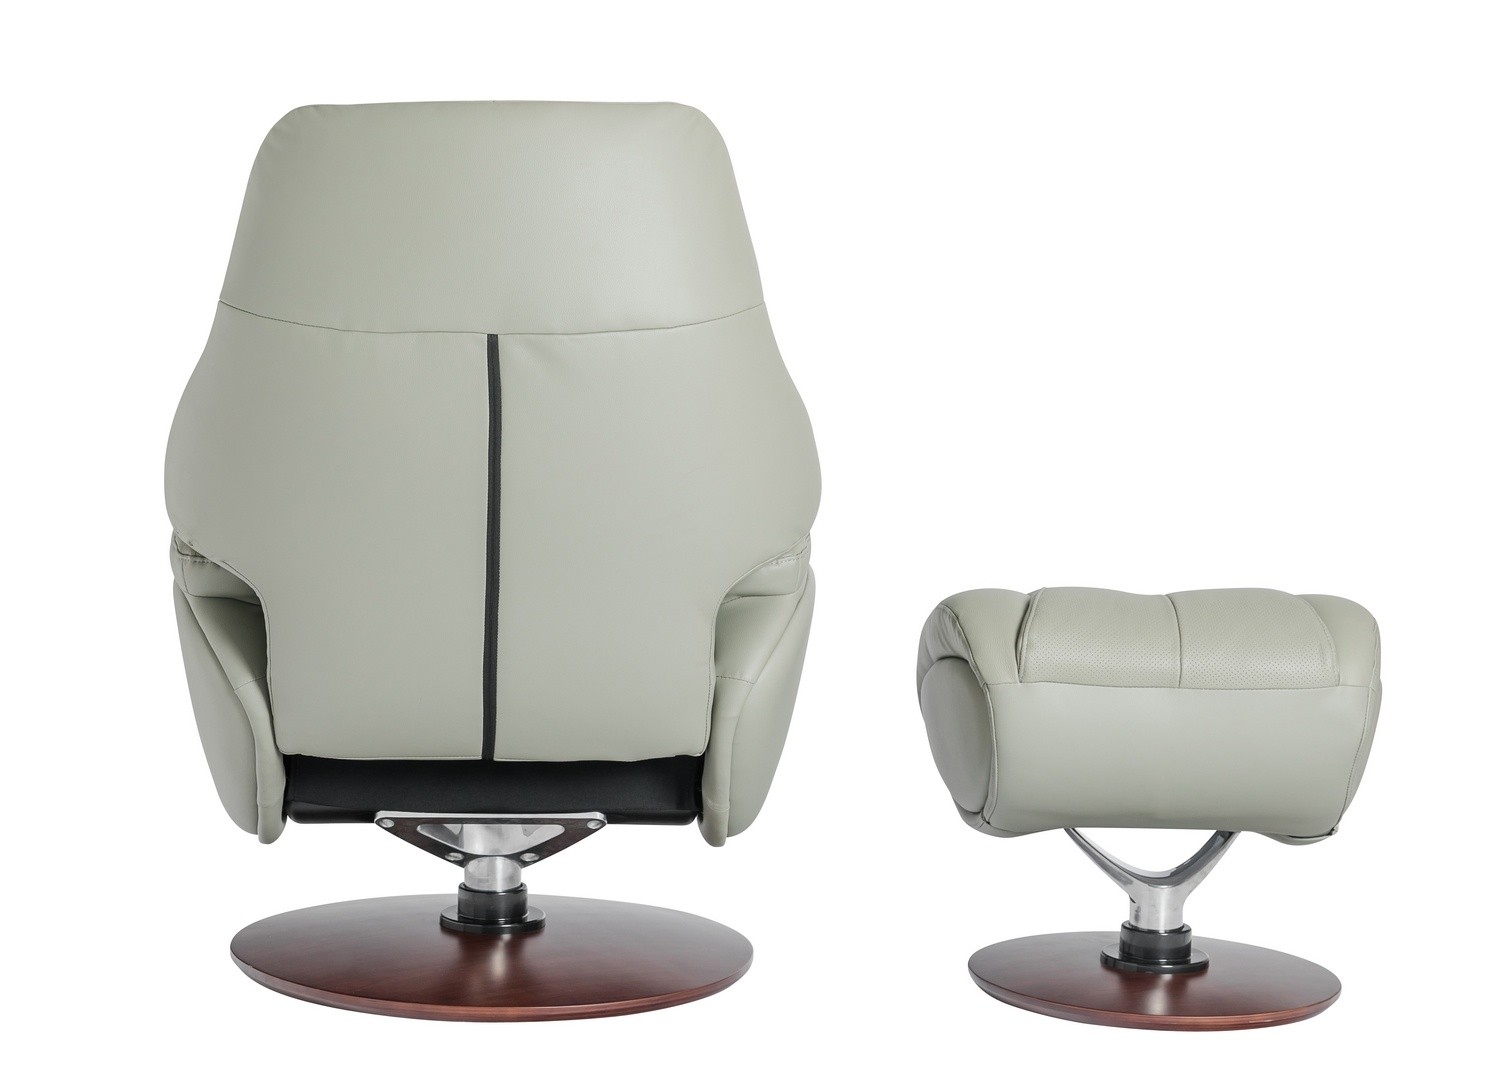 Barcalounger Marjon Pedestal Recliner Chair/Ottoman - Capri Gray/Leather Match